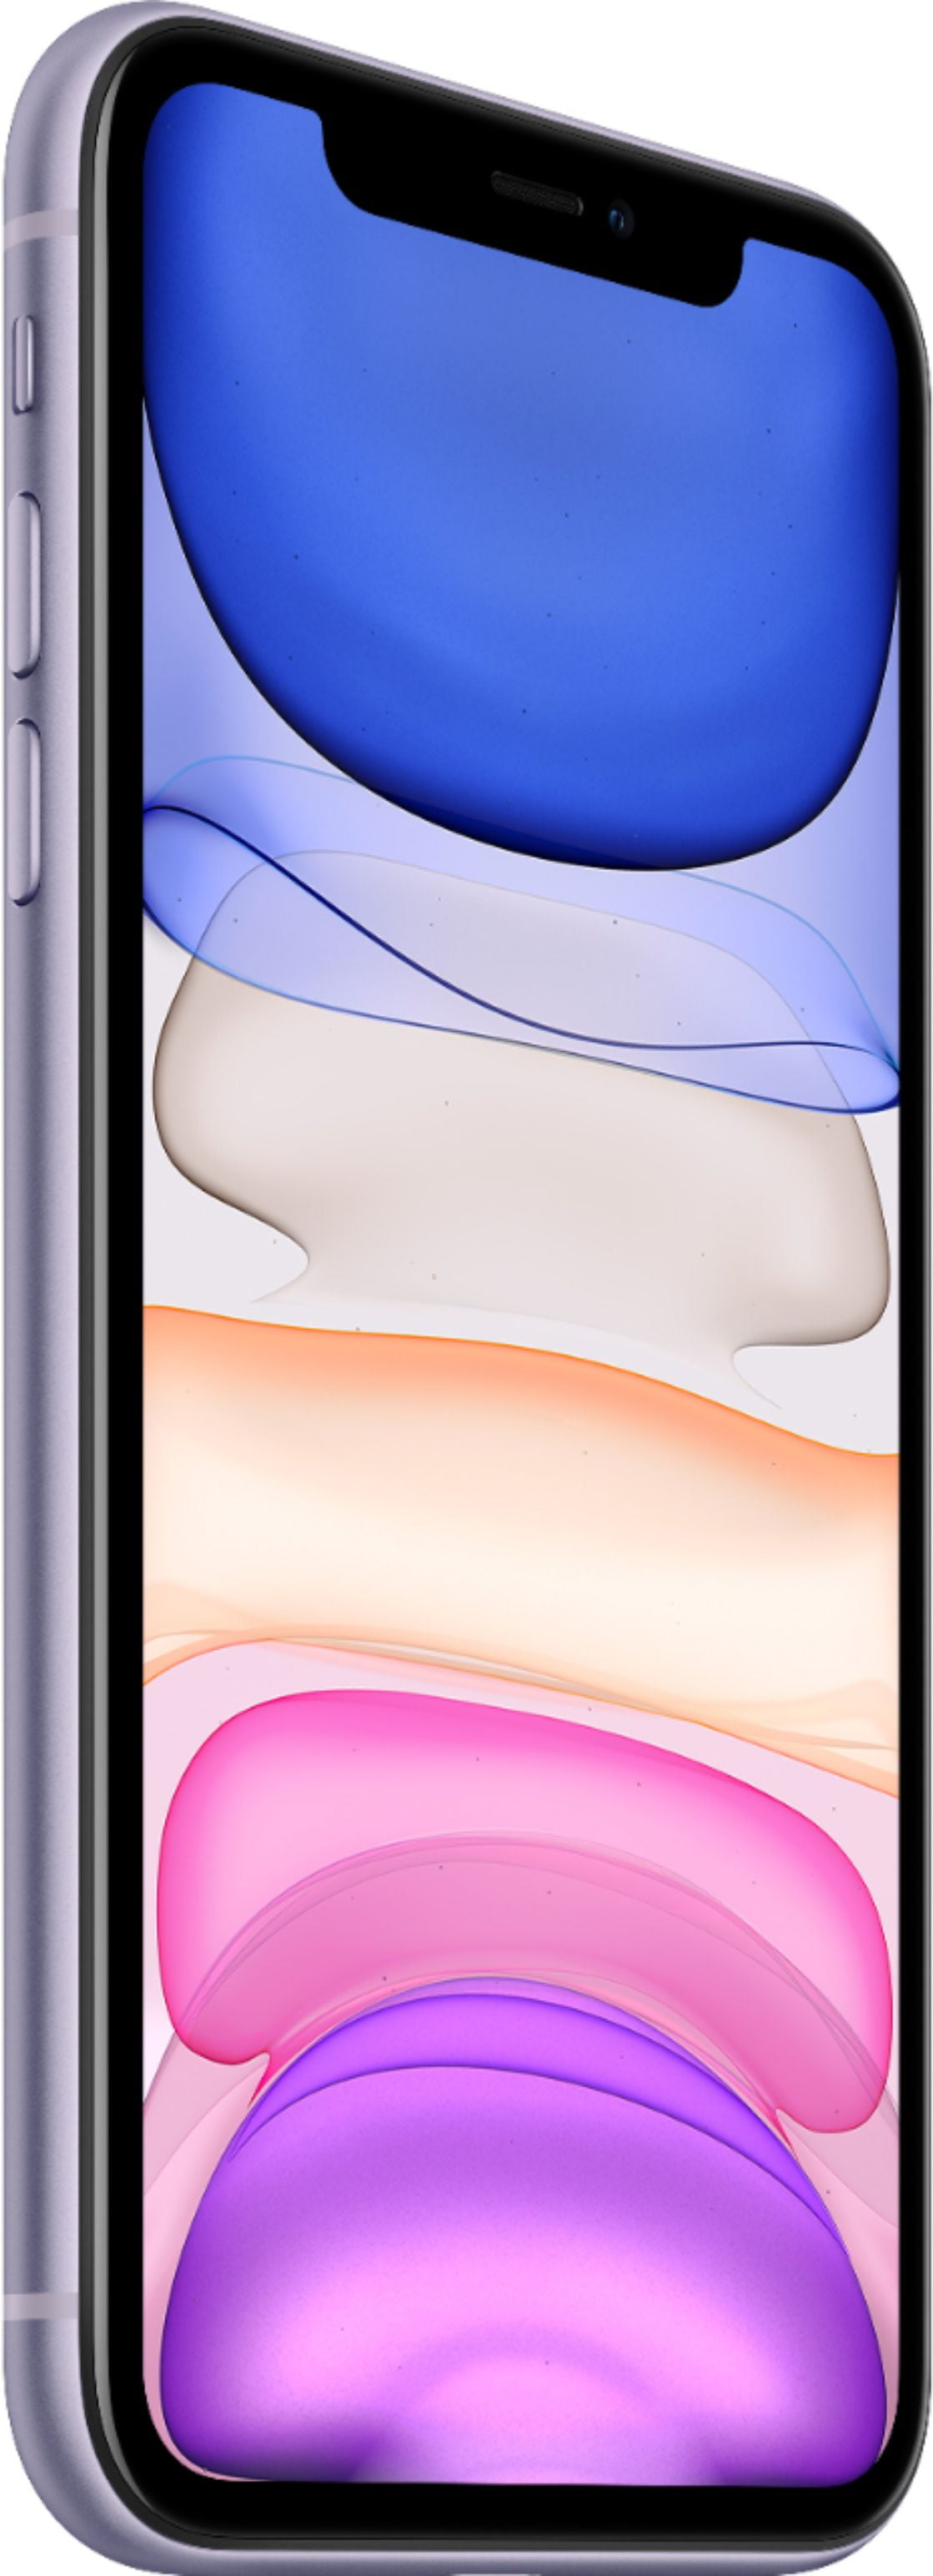 Restored Apple iPhone 11 256GB Purple Fully Unlocked Smartphone